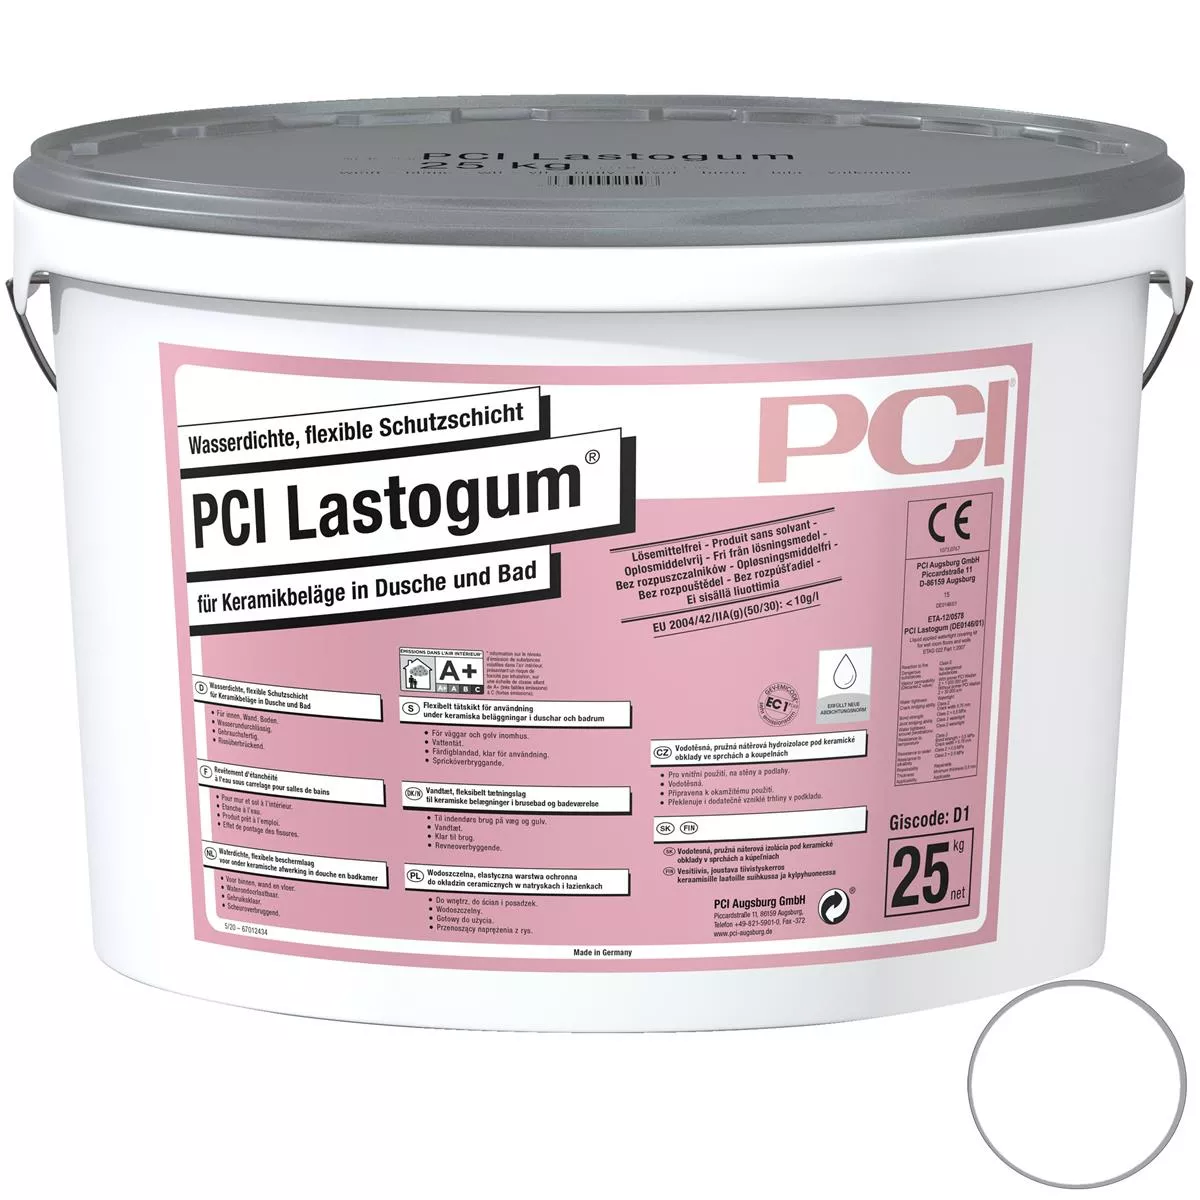 PCI Lastogum Waterproof Flexible Protective Layer White 25KG